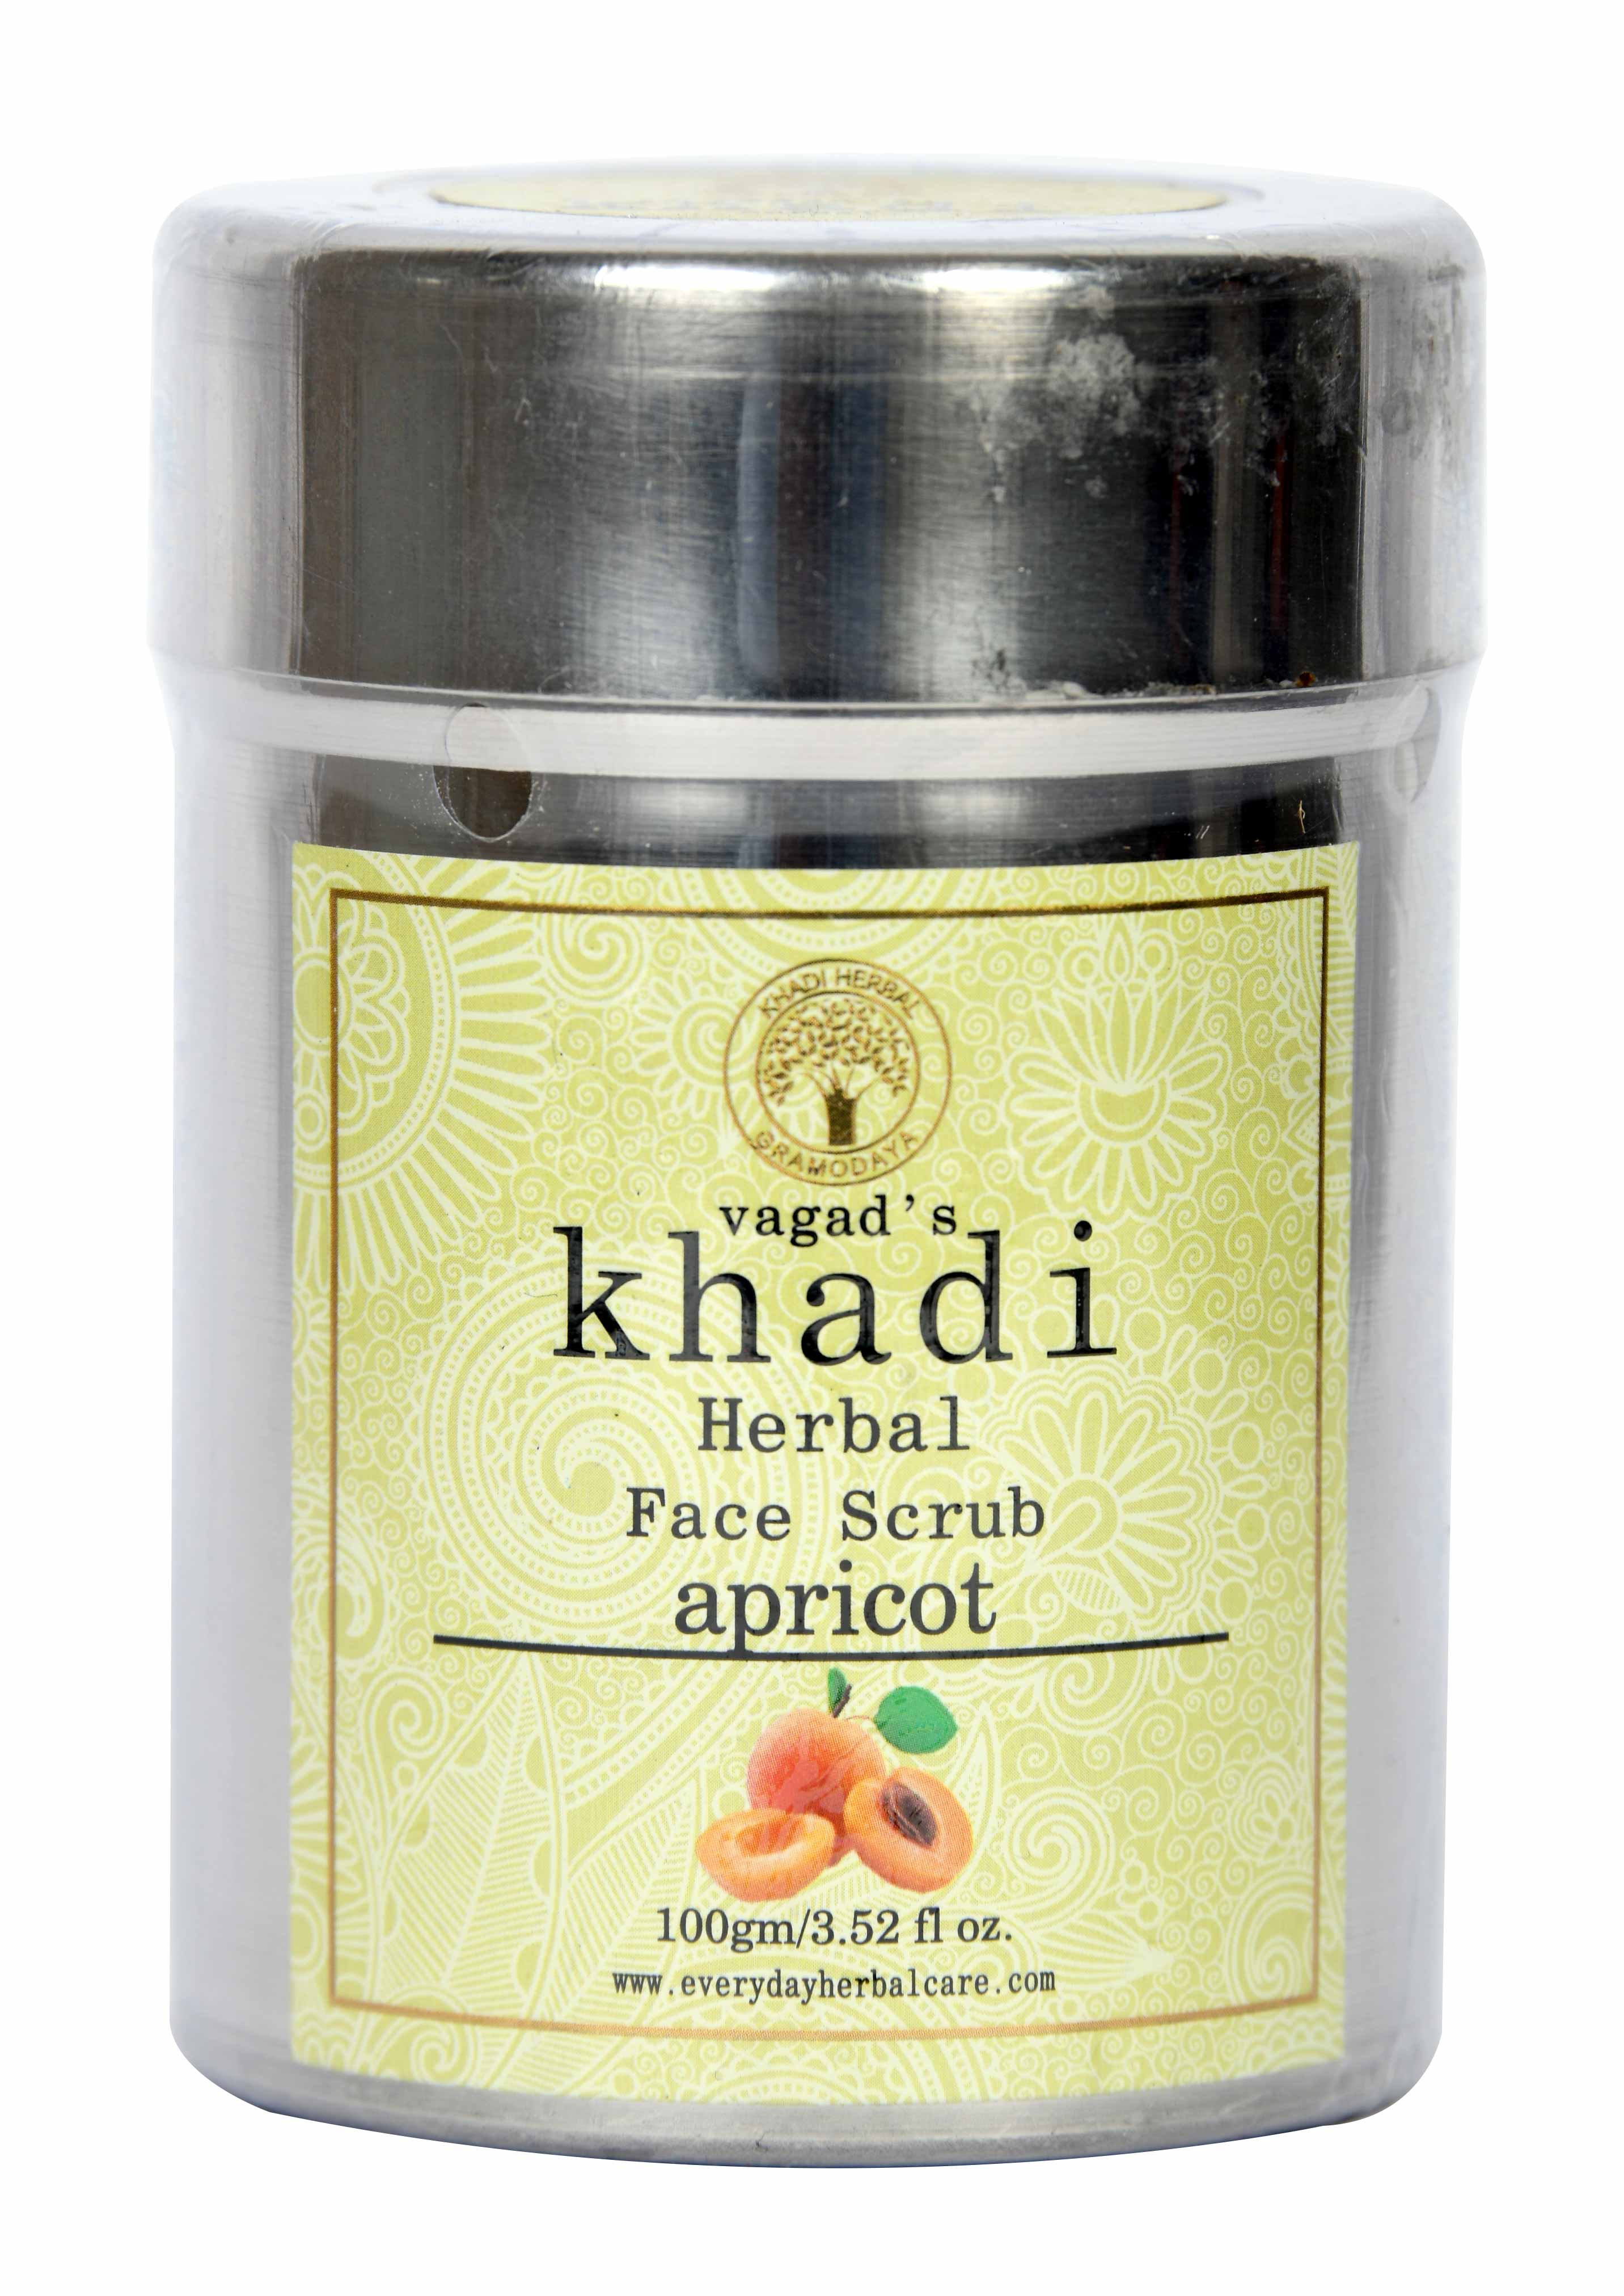 Buy Vagad's Khadi Apricot Scrub at Best Price Online